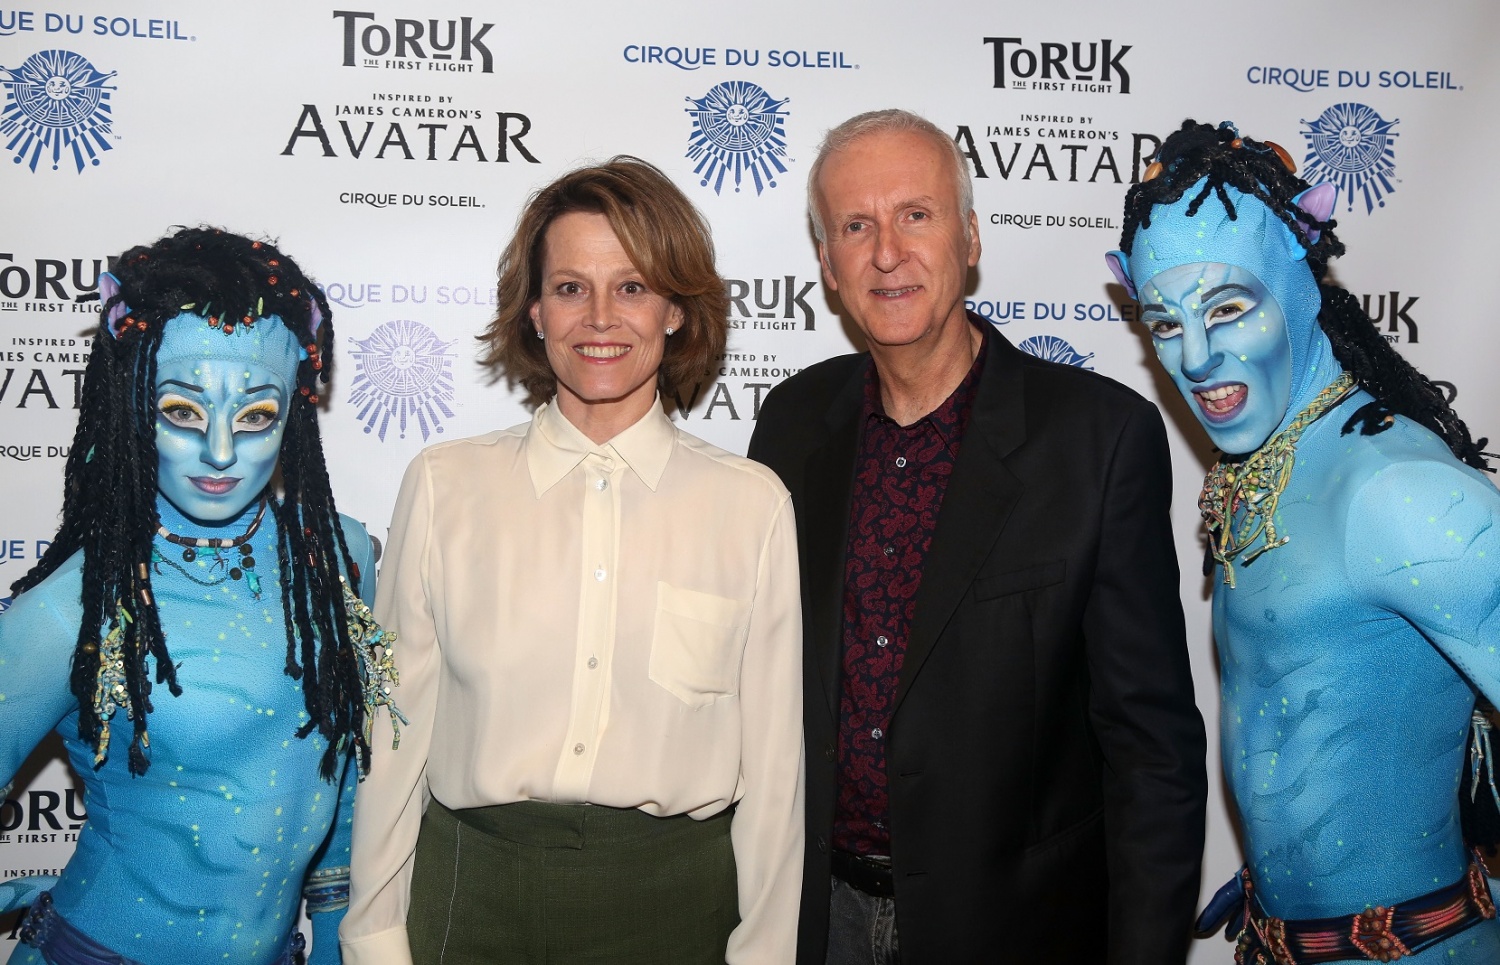 Sigourney Weaver and James Cameron - Cirque Du Soleil's "Toruk" New York Premeire